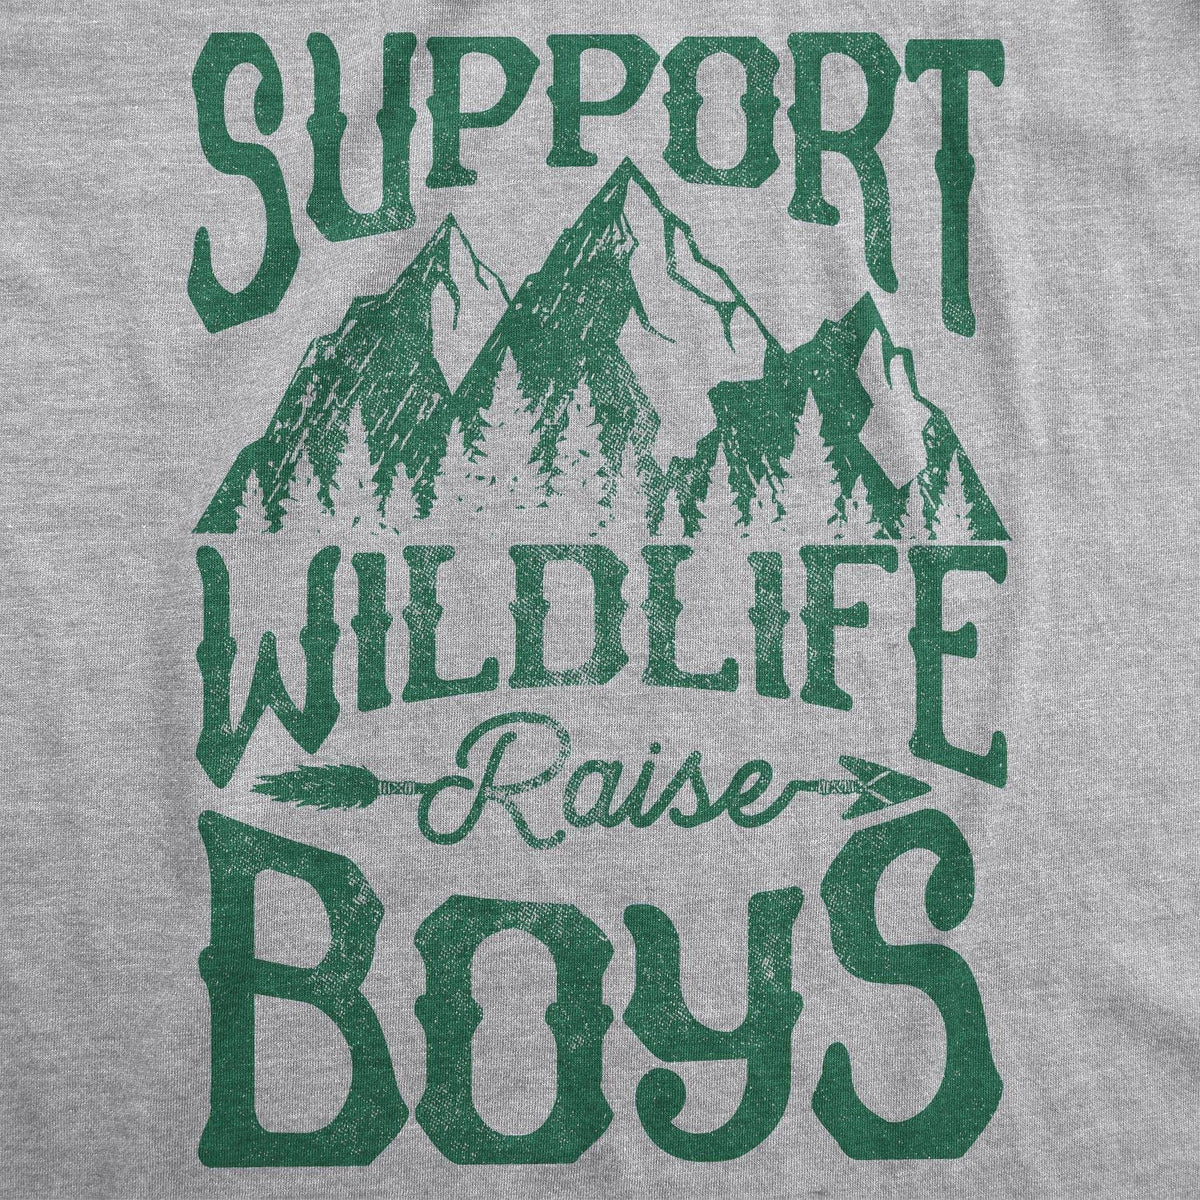 Support Wildlife Raise Boys Men&#39;s Tshirt  -  Crazy Dog T-Shirts